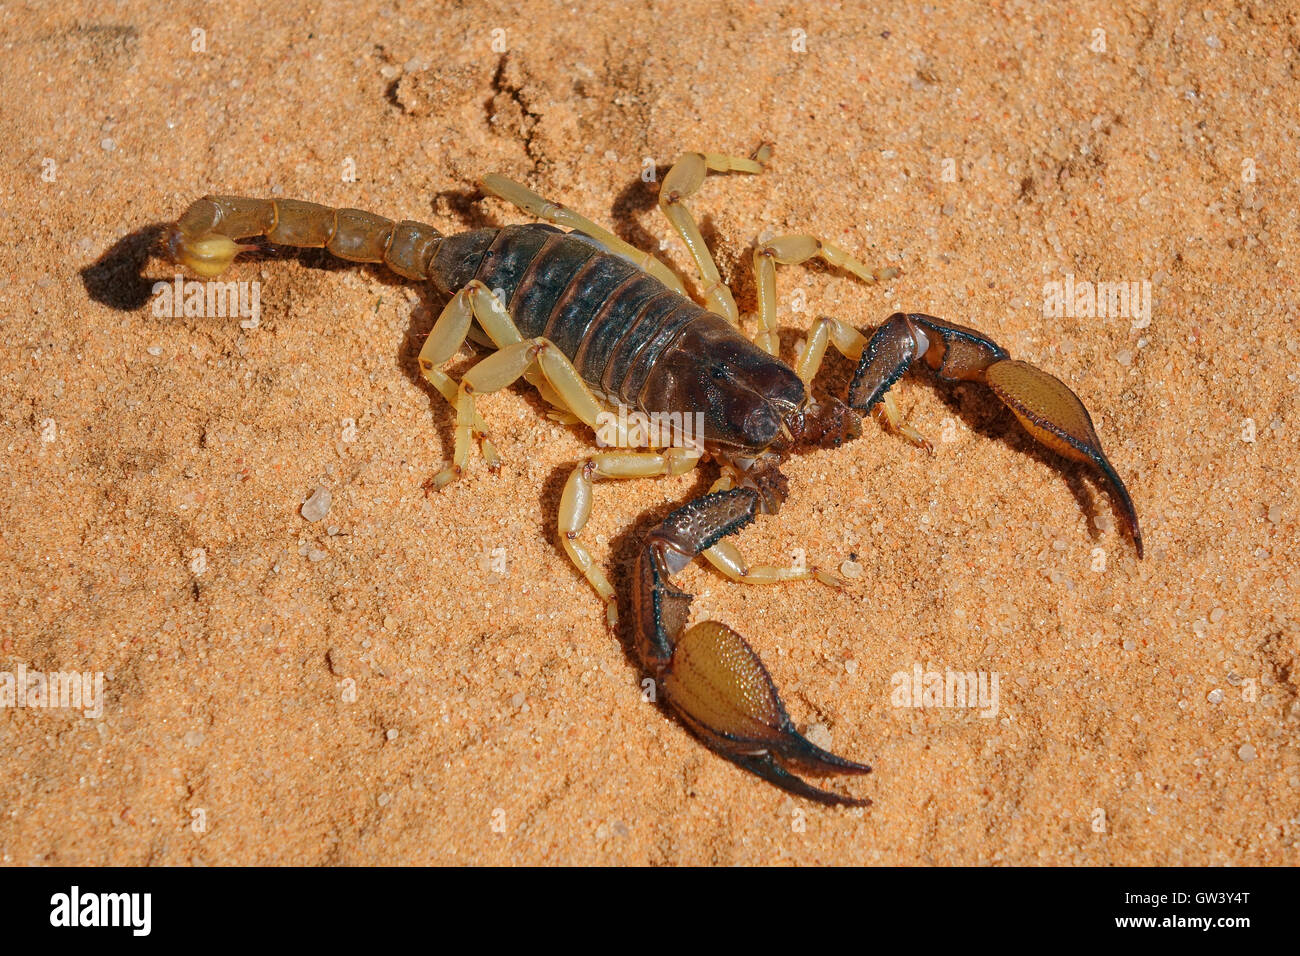 A poisonous scorpion (Parabuthus spp.), Kalahari desert, South Africa Stock Photo